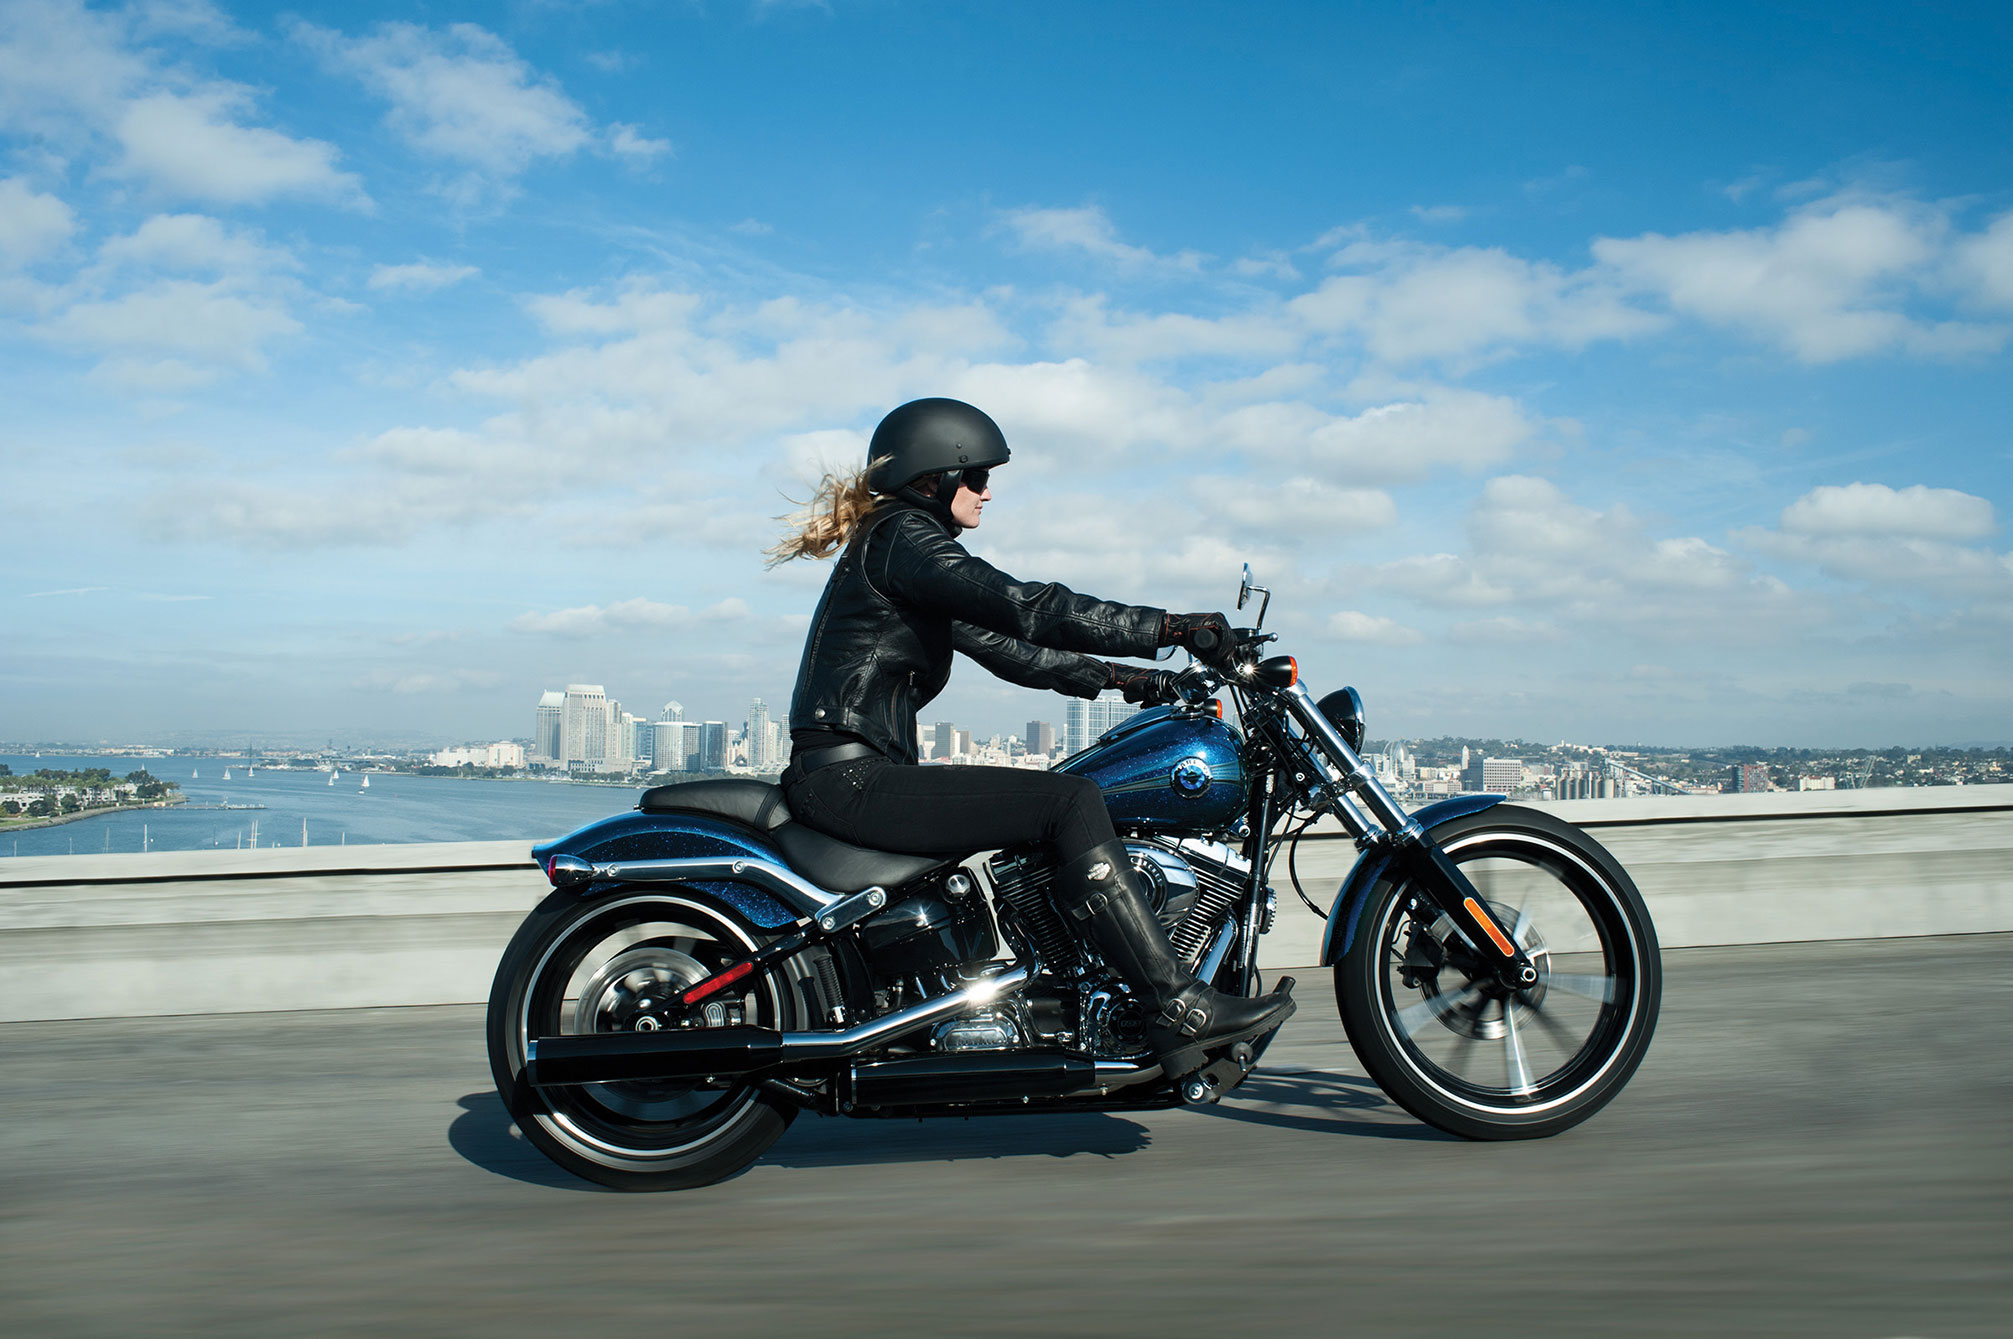 2013 Harley Davidson Fxsb Breakout Review